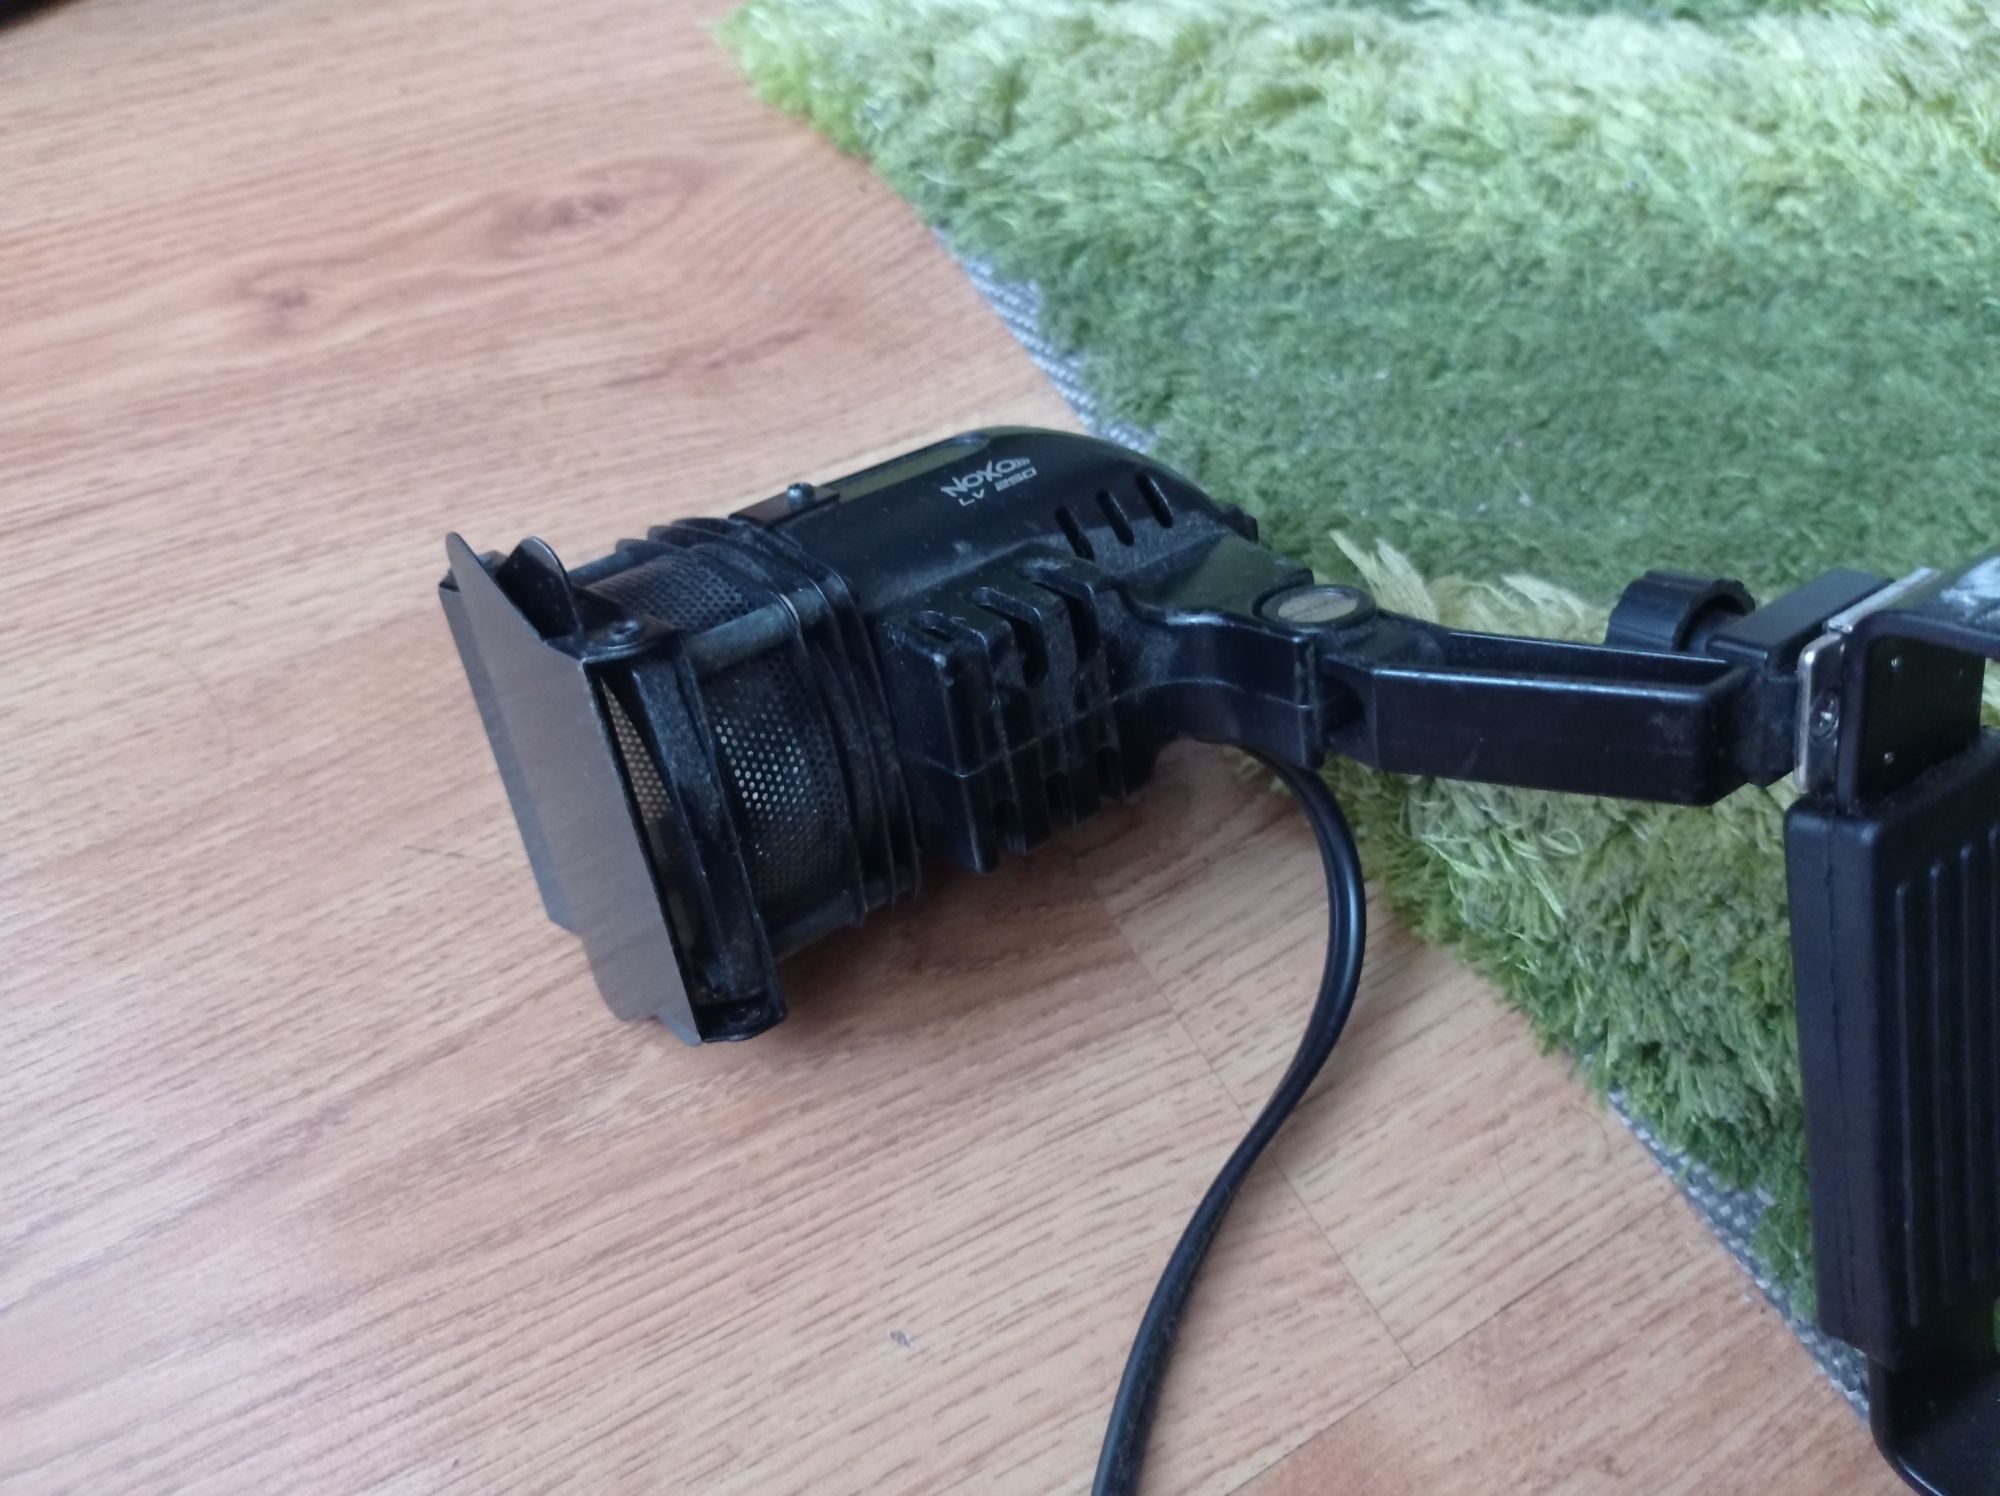 Lampa  do kamery aparatu noxo  LV 250. 12v